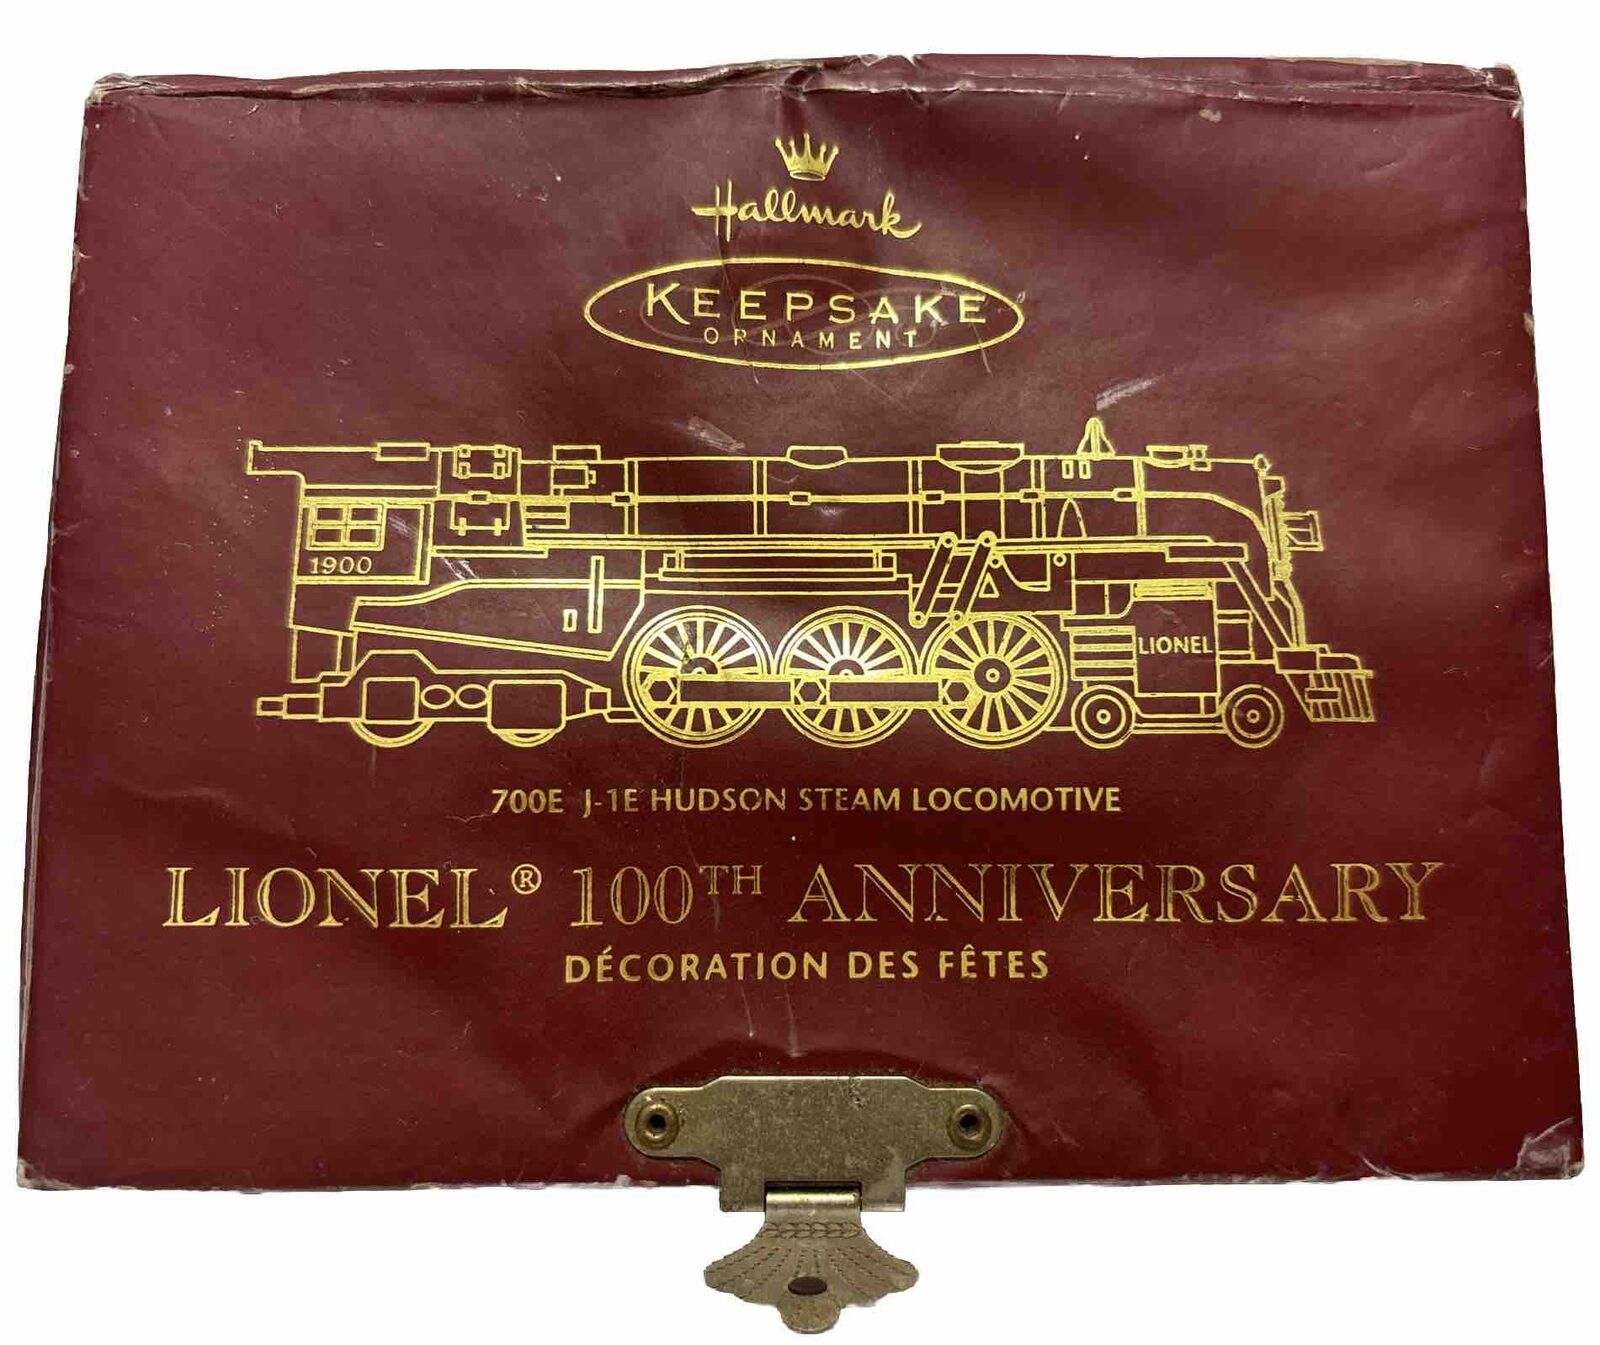 Hallmark Keepsake Ornament Lionel 100th Anniversary 700E J-1E Hudson Locomotive